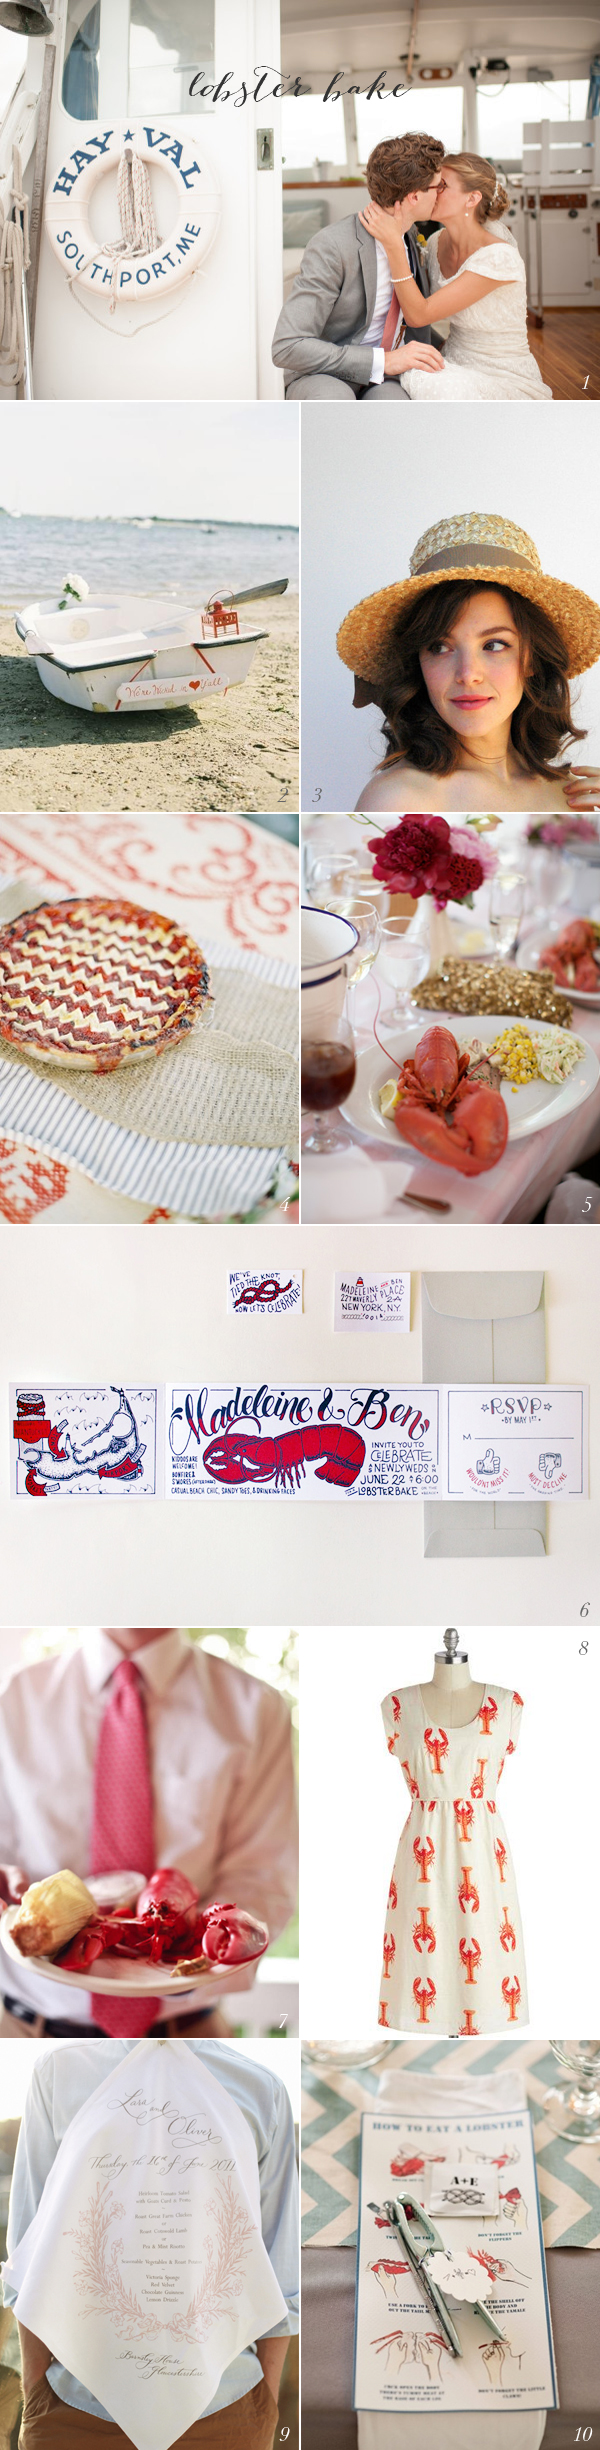 Lobster Bake Wedding Ideas